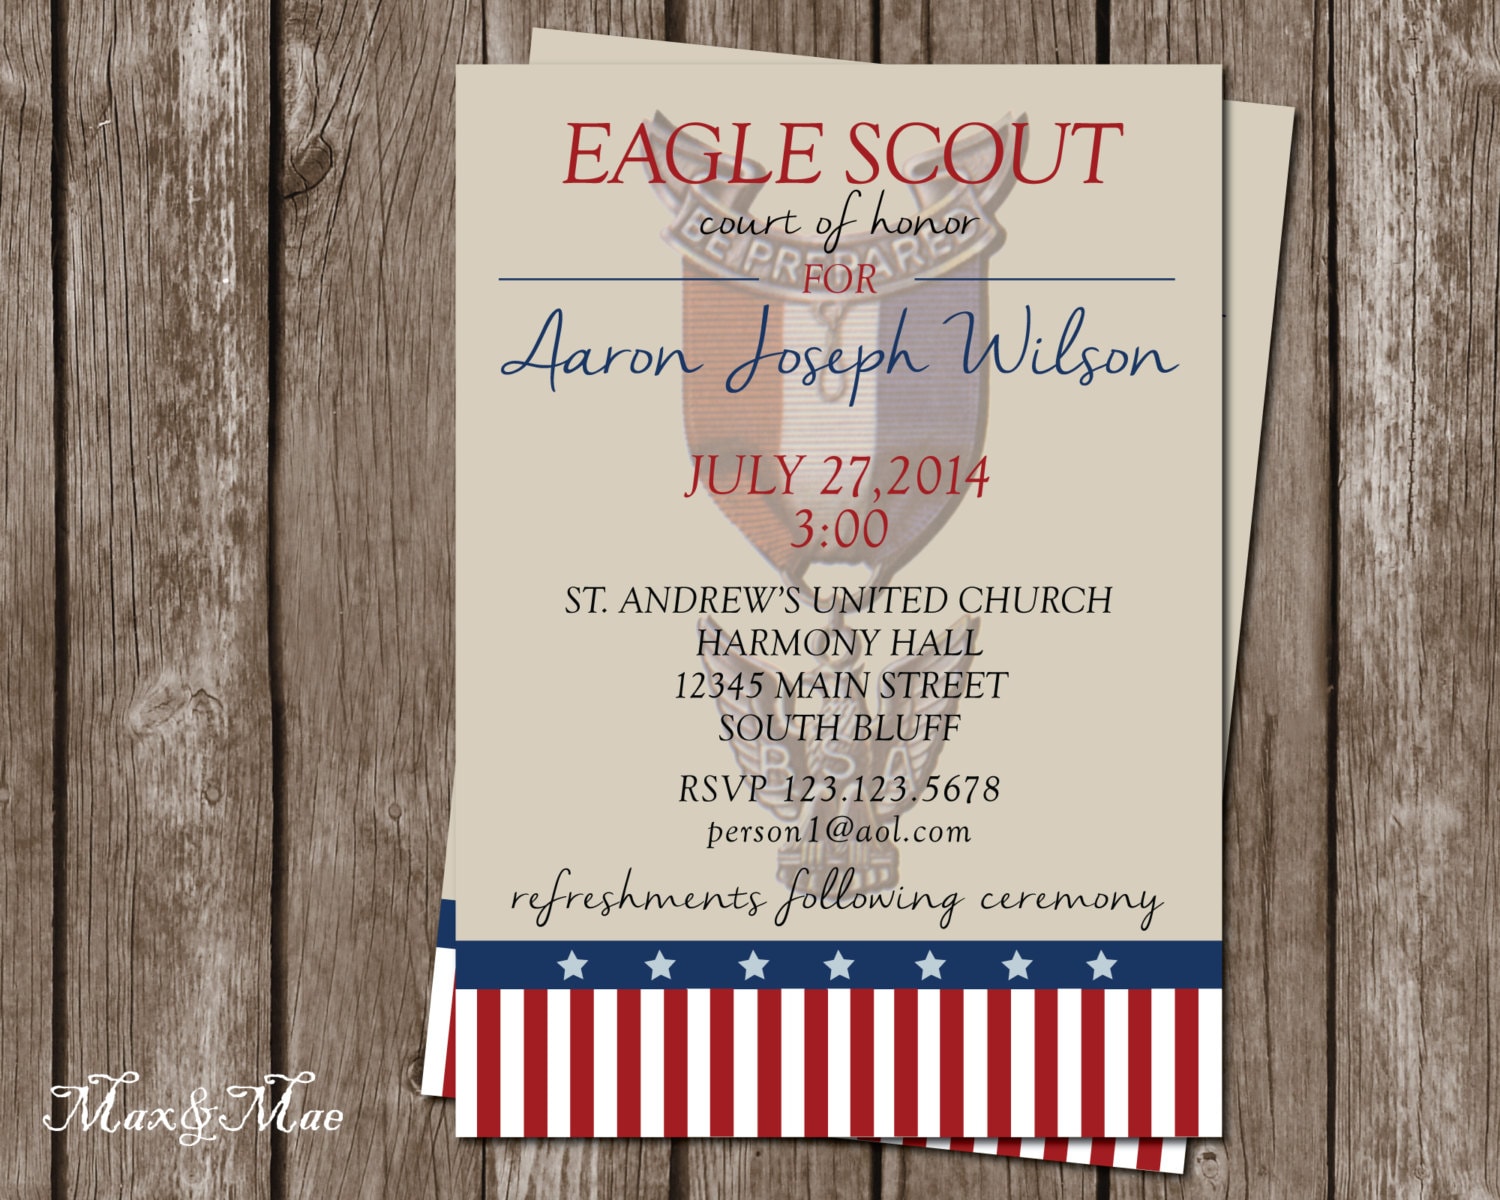 eagle-scout-invitation-court-of-honor-bsa-invite-eagle